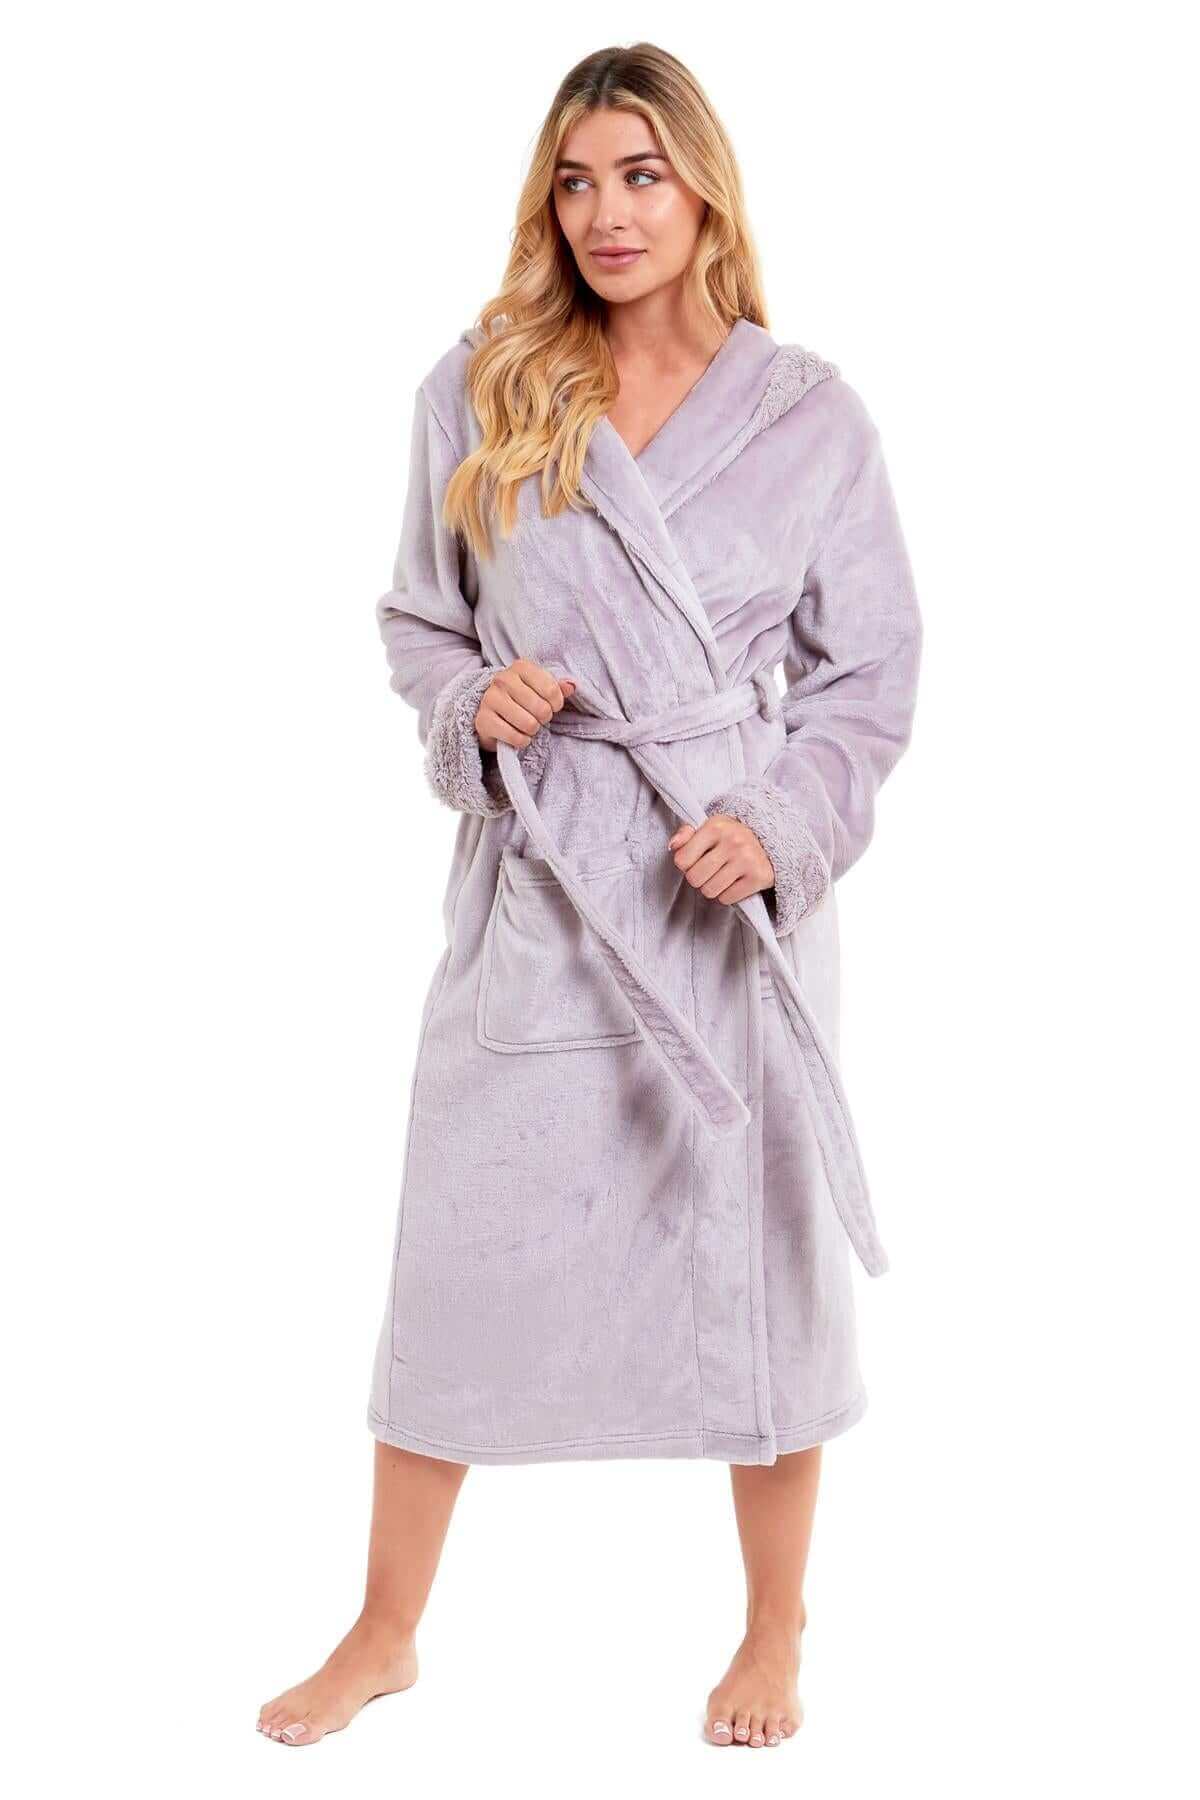 Women's Faux Fur Hooded Robe Dressing Gown, Super Soft Bath Robe. Buy now for £20.00. A Robe by Daisy Dreamer. bath robe, bathrobe, blush pink, clothing, comfortable, cosy, daisy dreamer, dressing, dressing gown, dusky pink, faux fur, flannel, fleece, flu